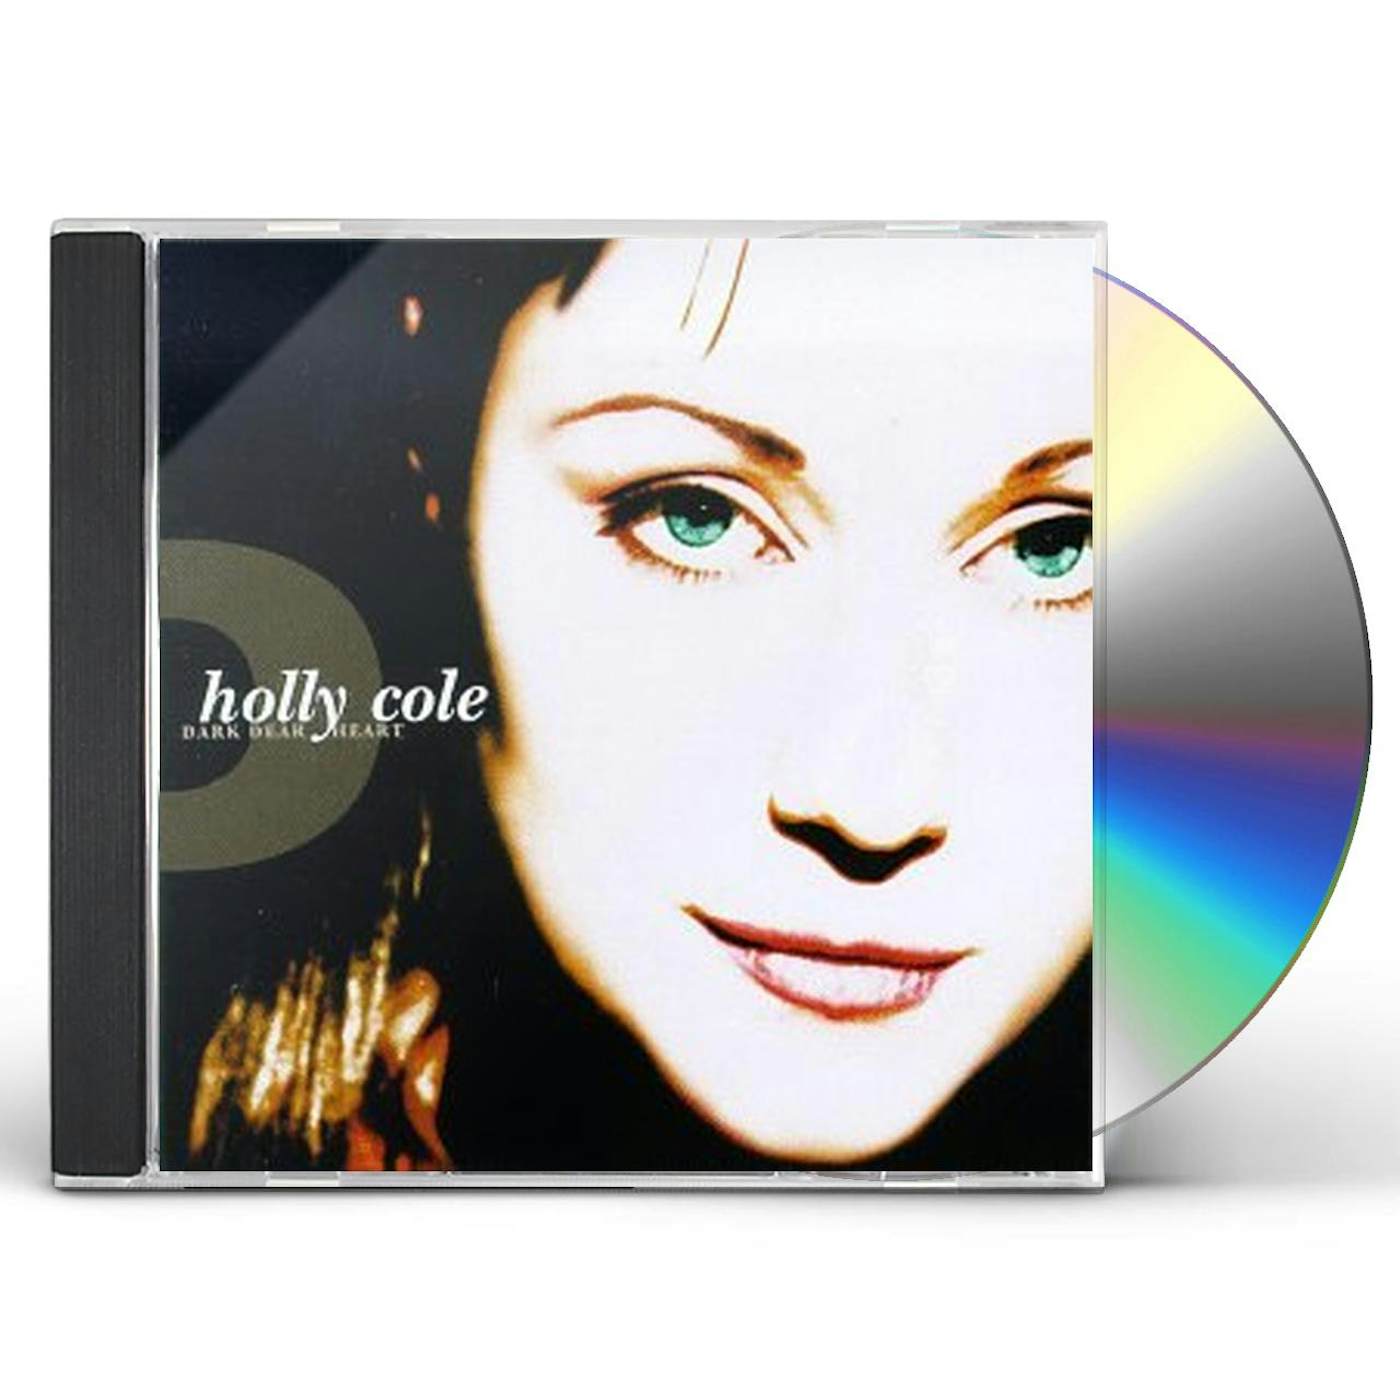 Holly Cole DARK DEAR HEART CD